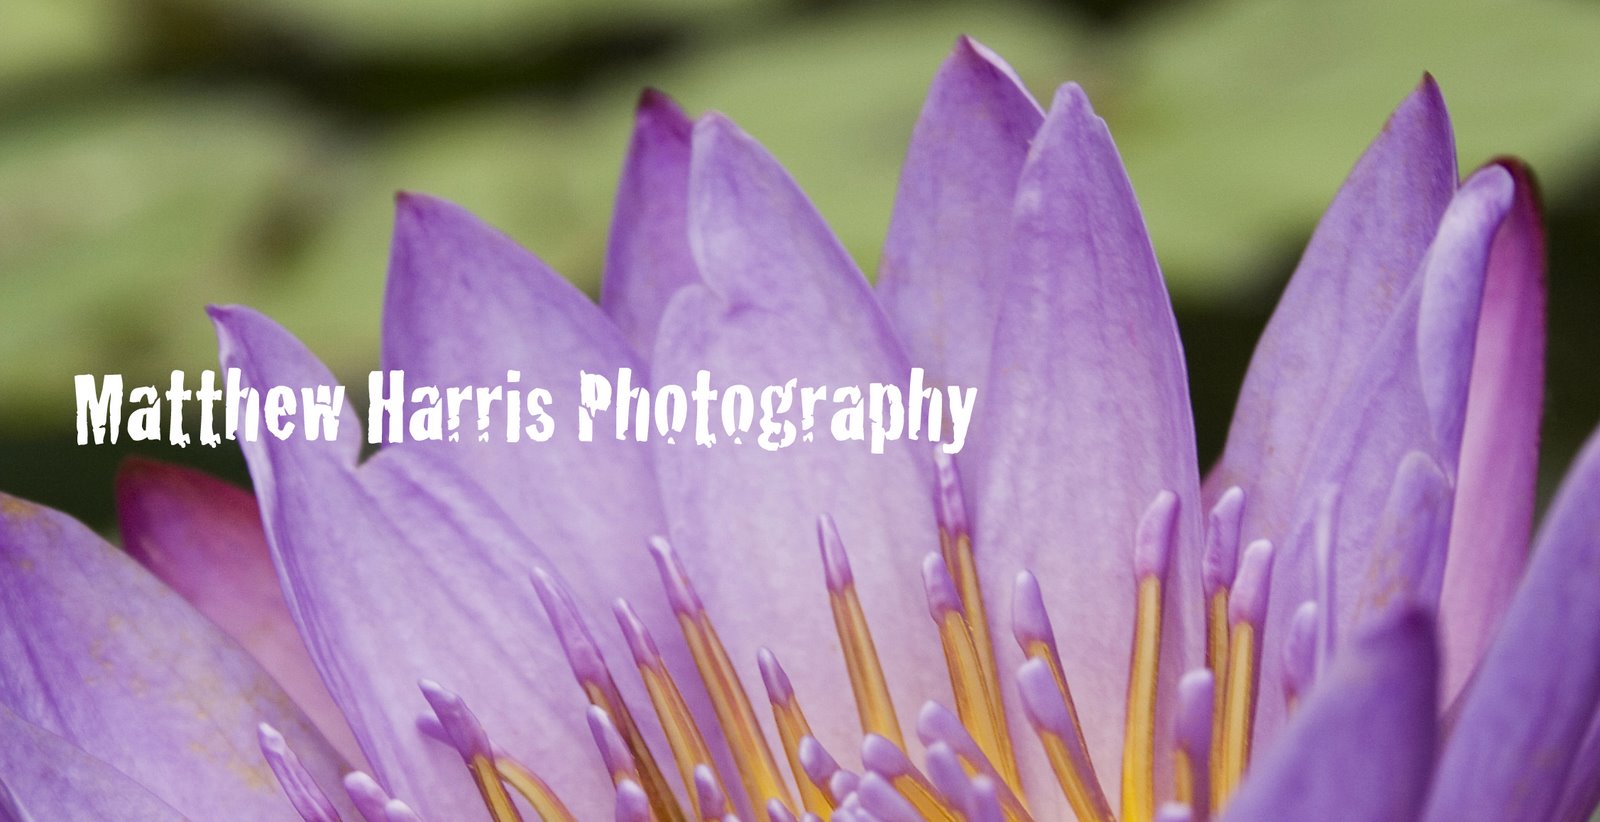 Matthew Harris Photography